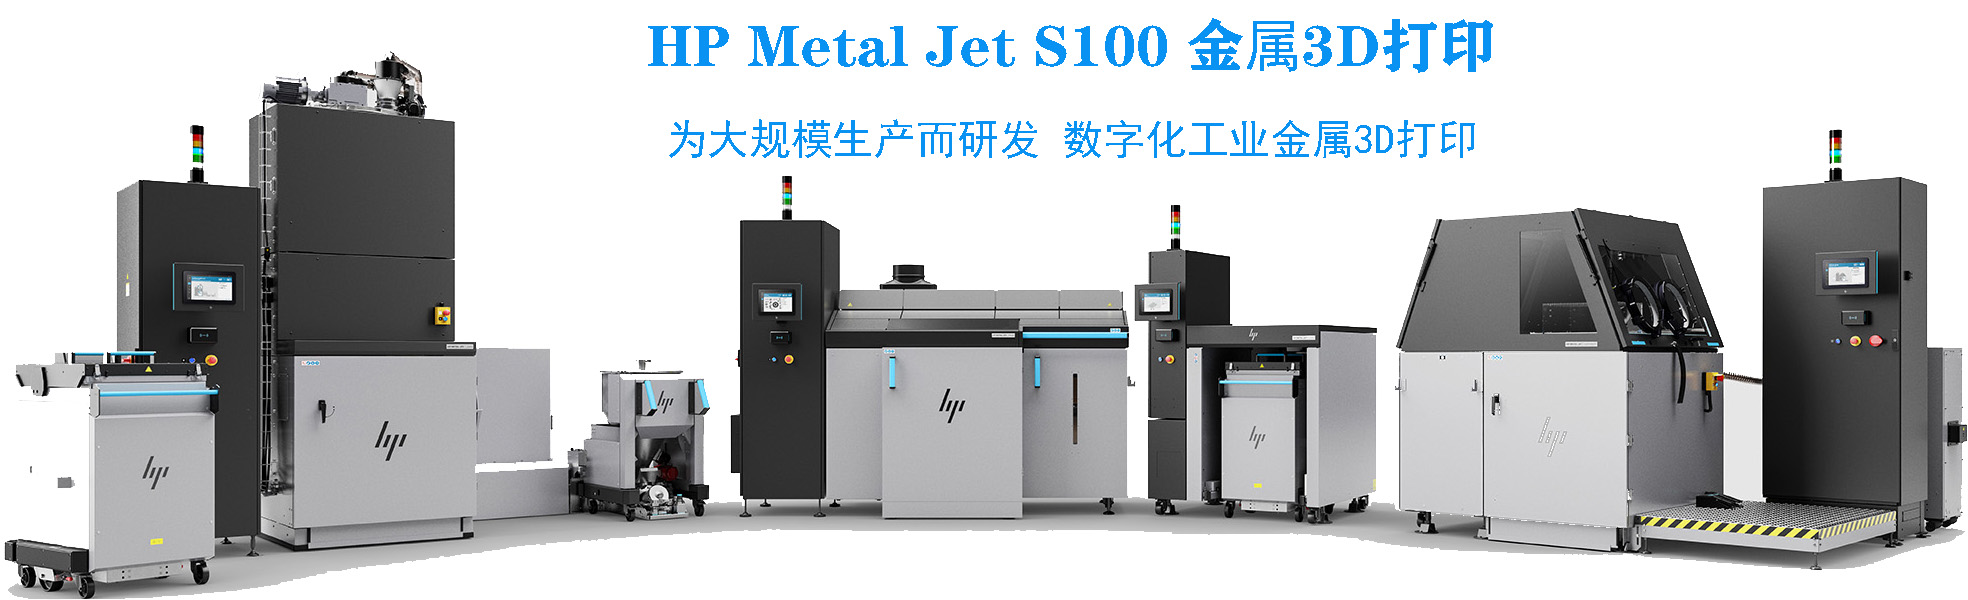 HP金属打印